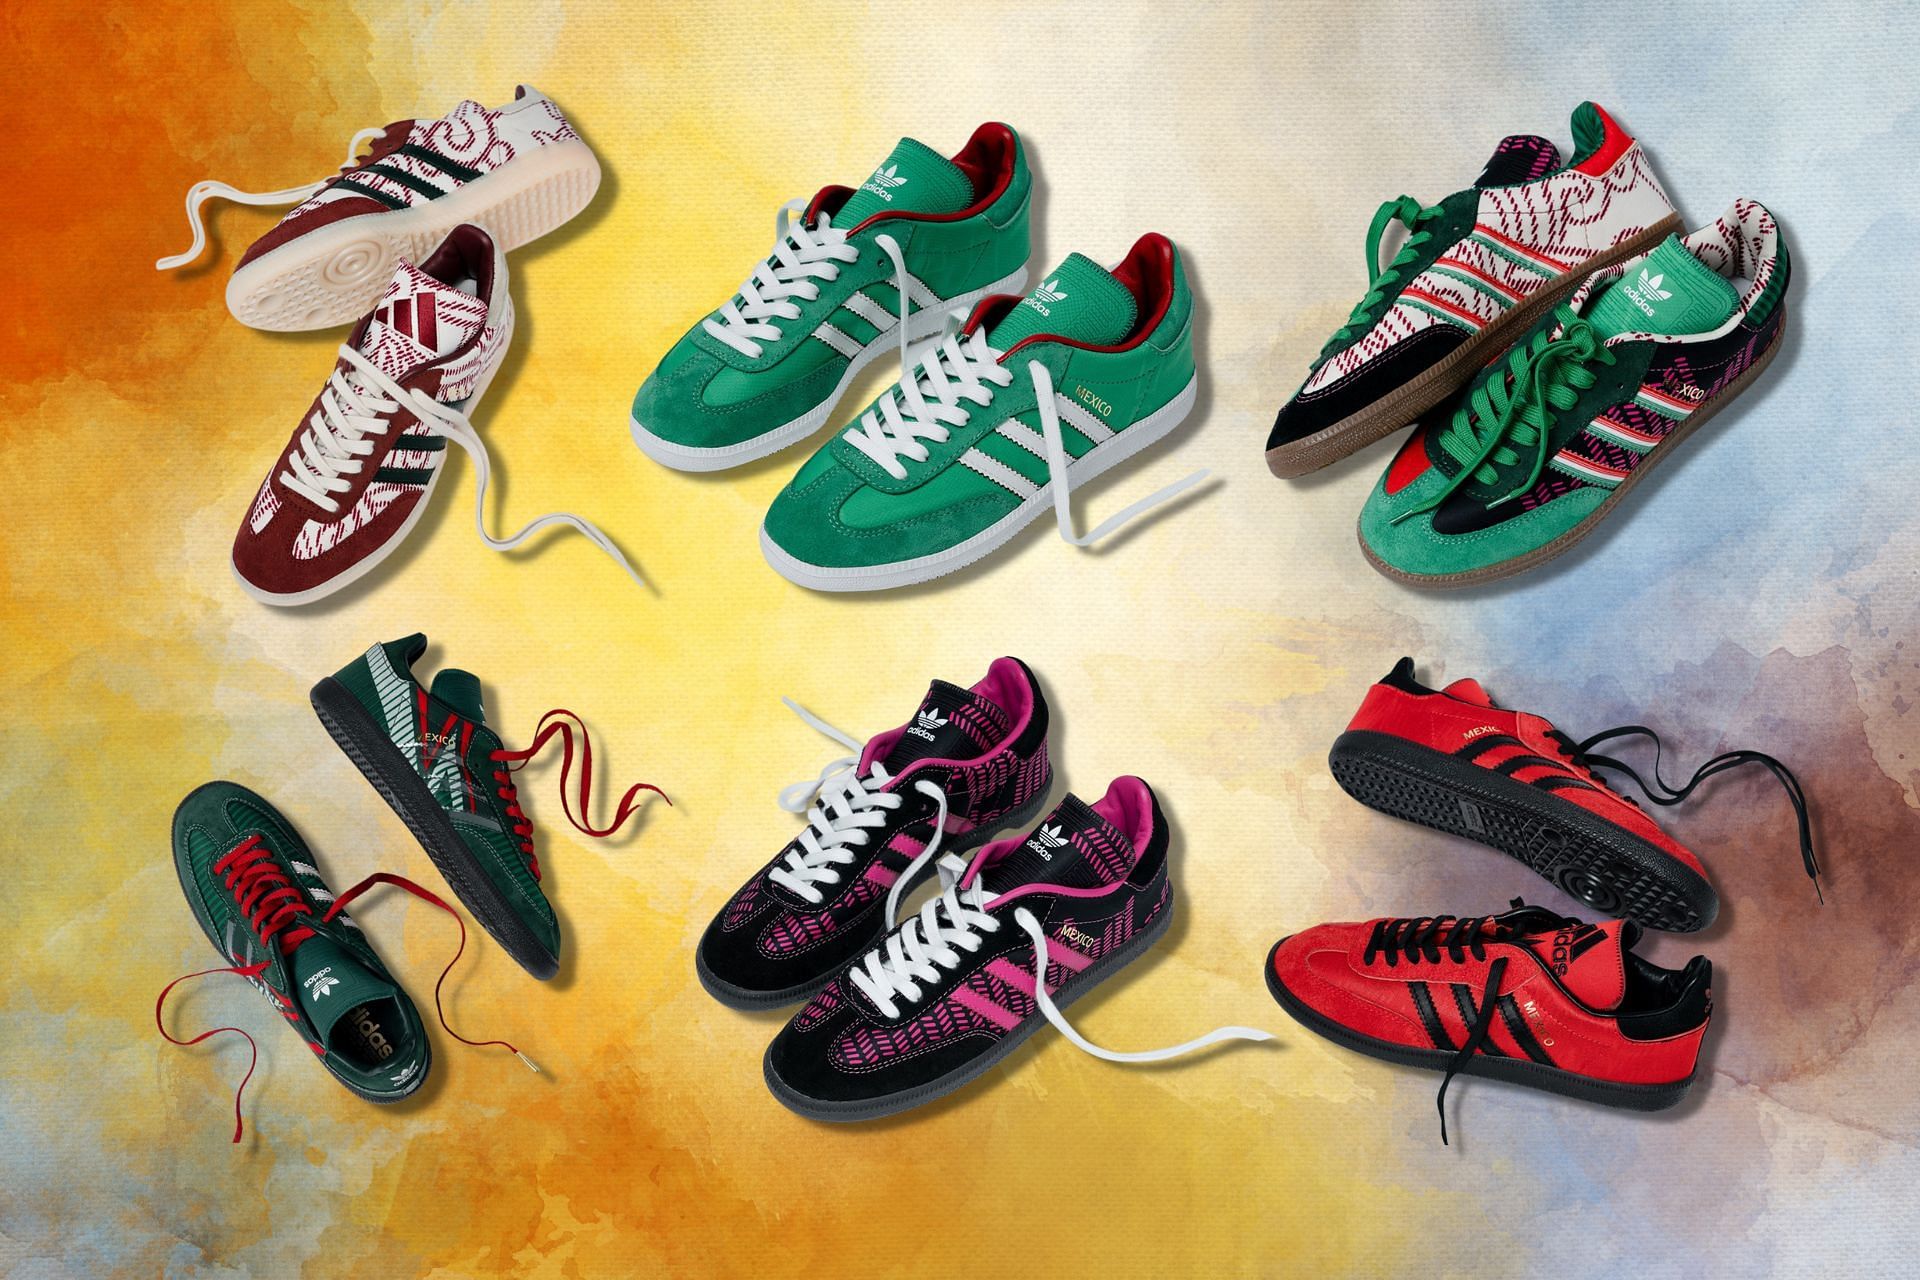 Mexico Football Federation x Adidas Samba 6-piece footwear collection raffle event (Image via Sportskeeda)